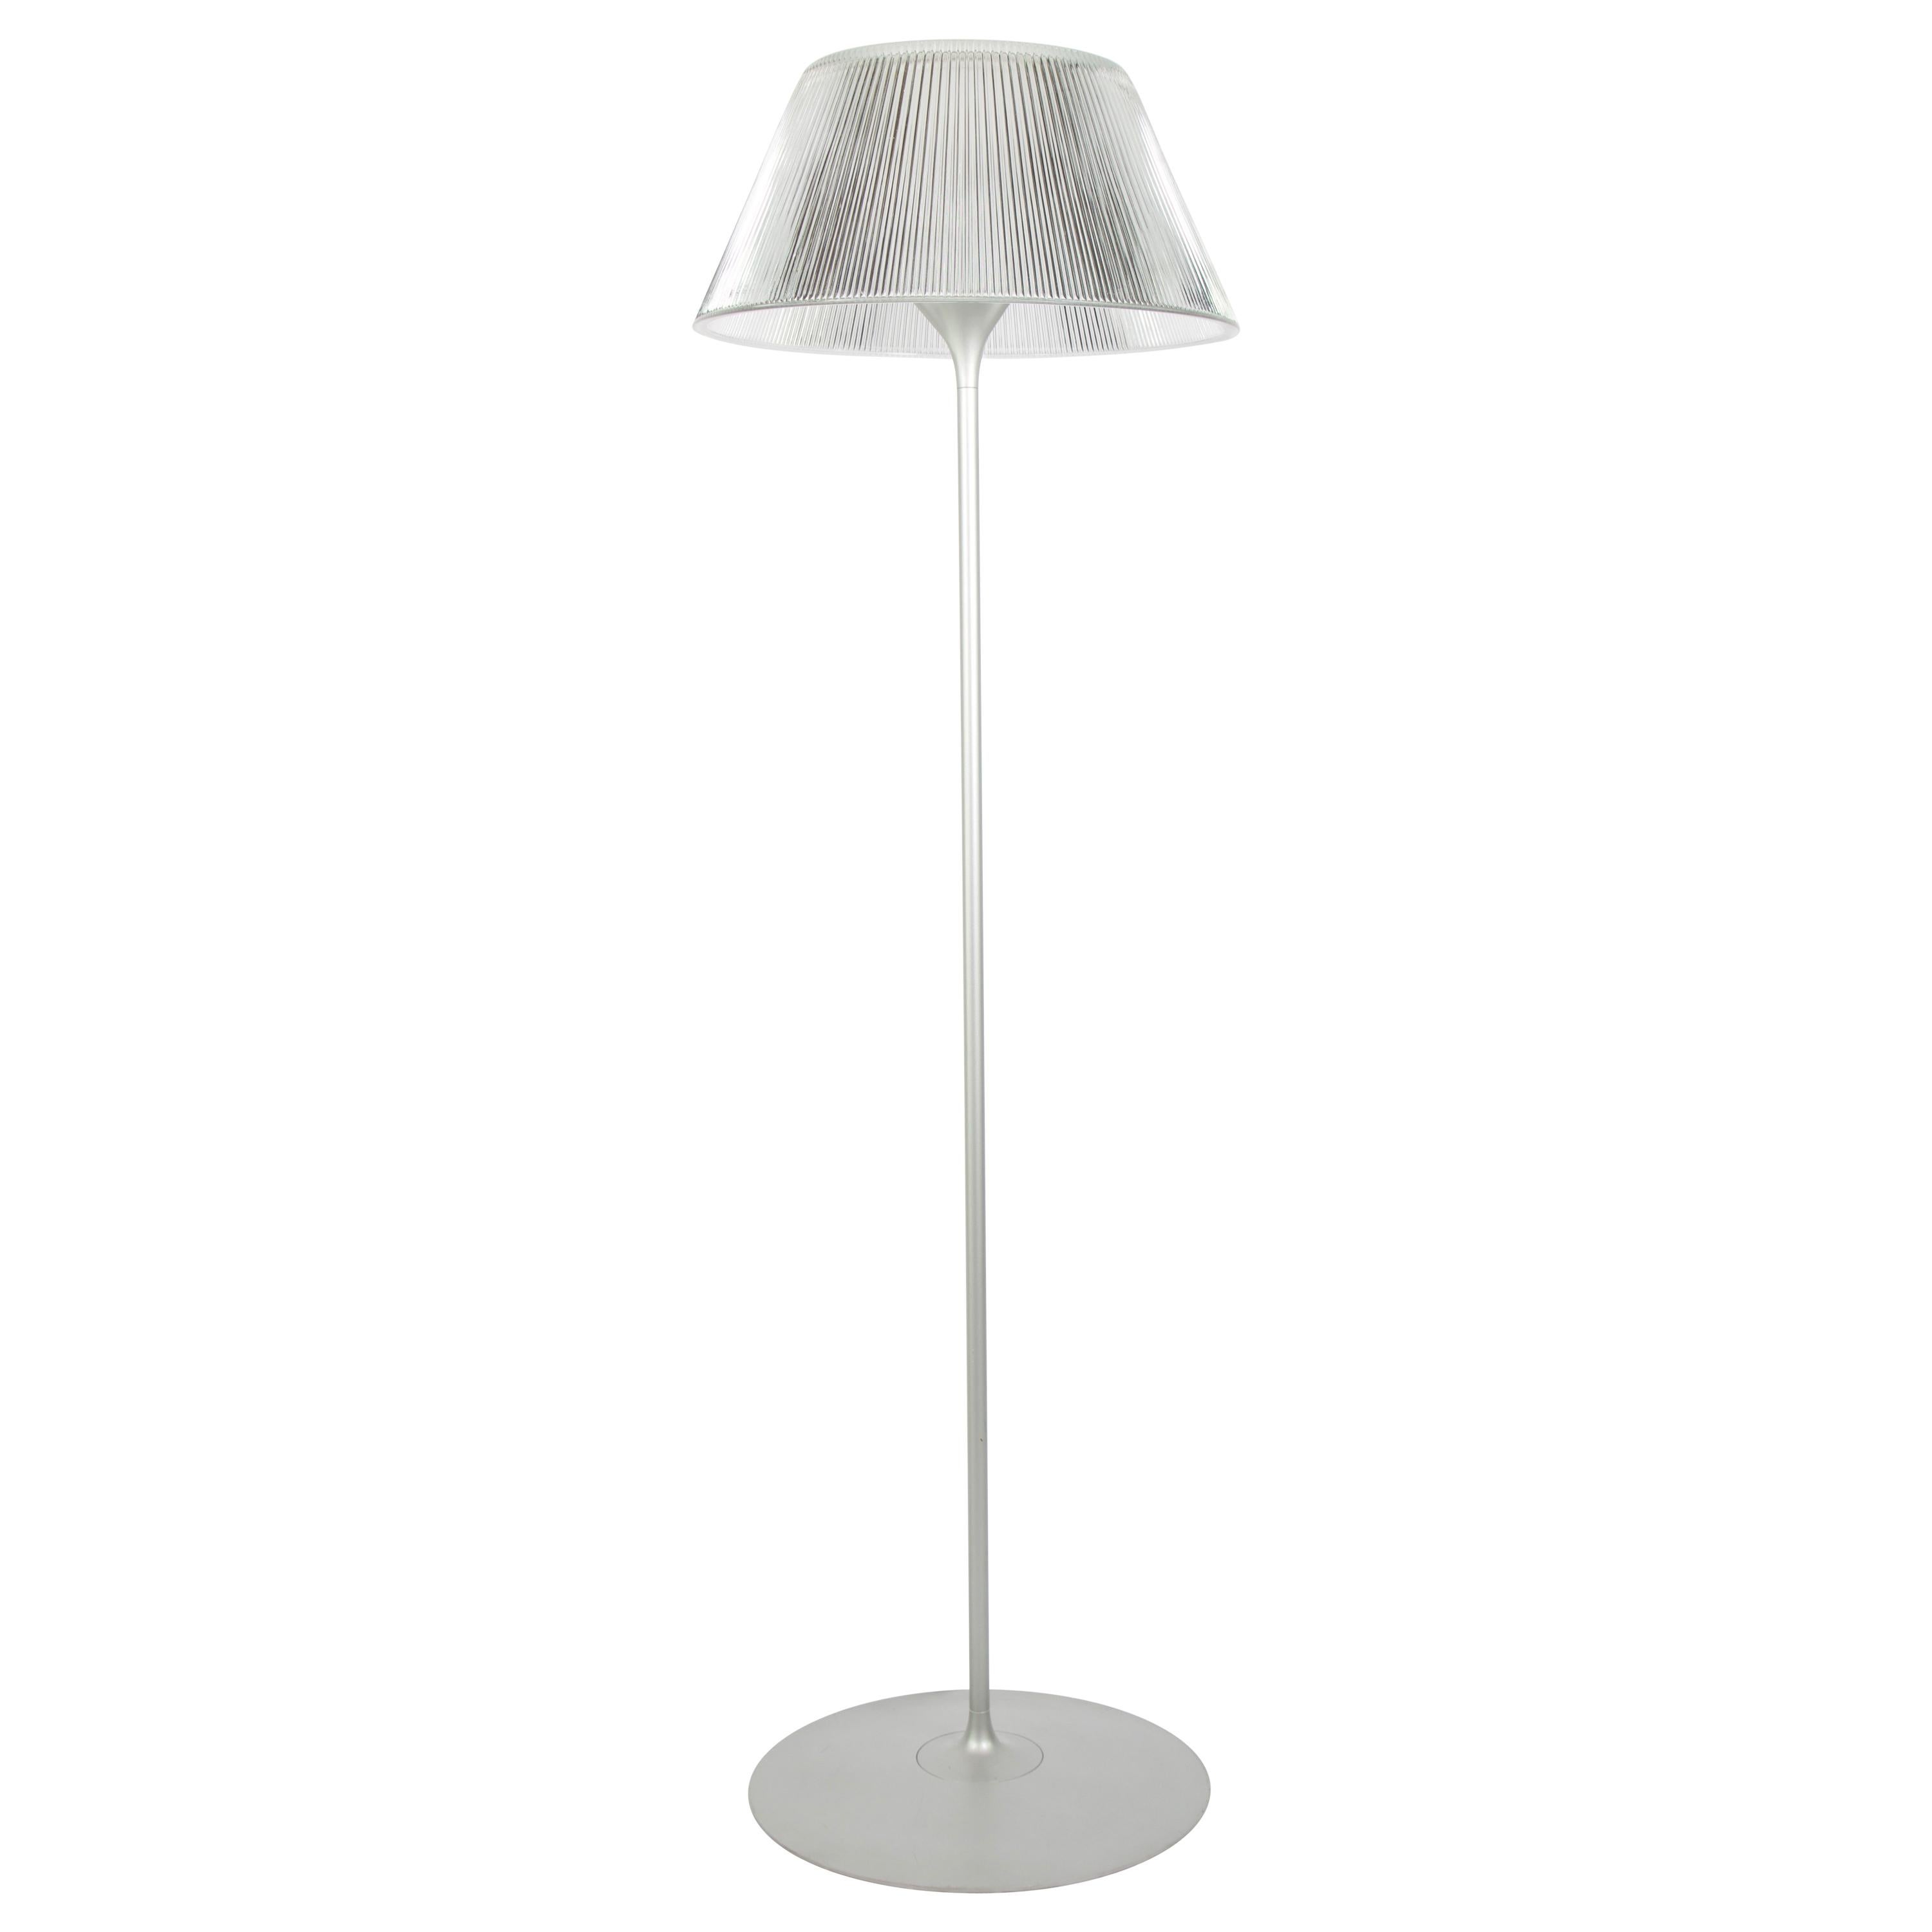 VINTAGE THEATRE LIGHT ANTIQUE FLOOR LAMP INDUSTRIAL LOFT DESIGN EAMES STARCK 50s 